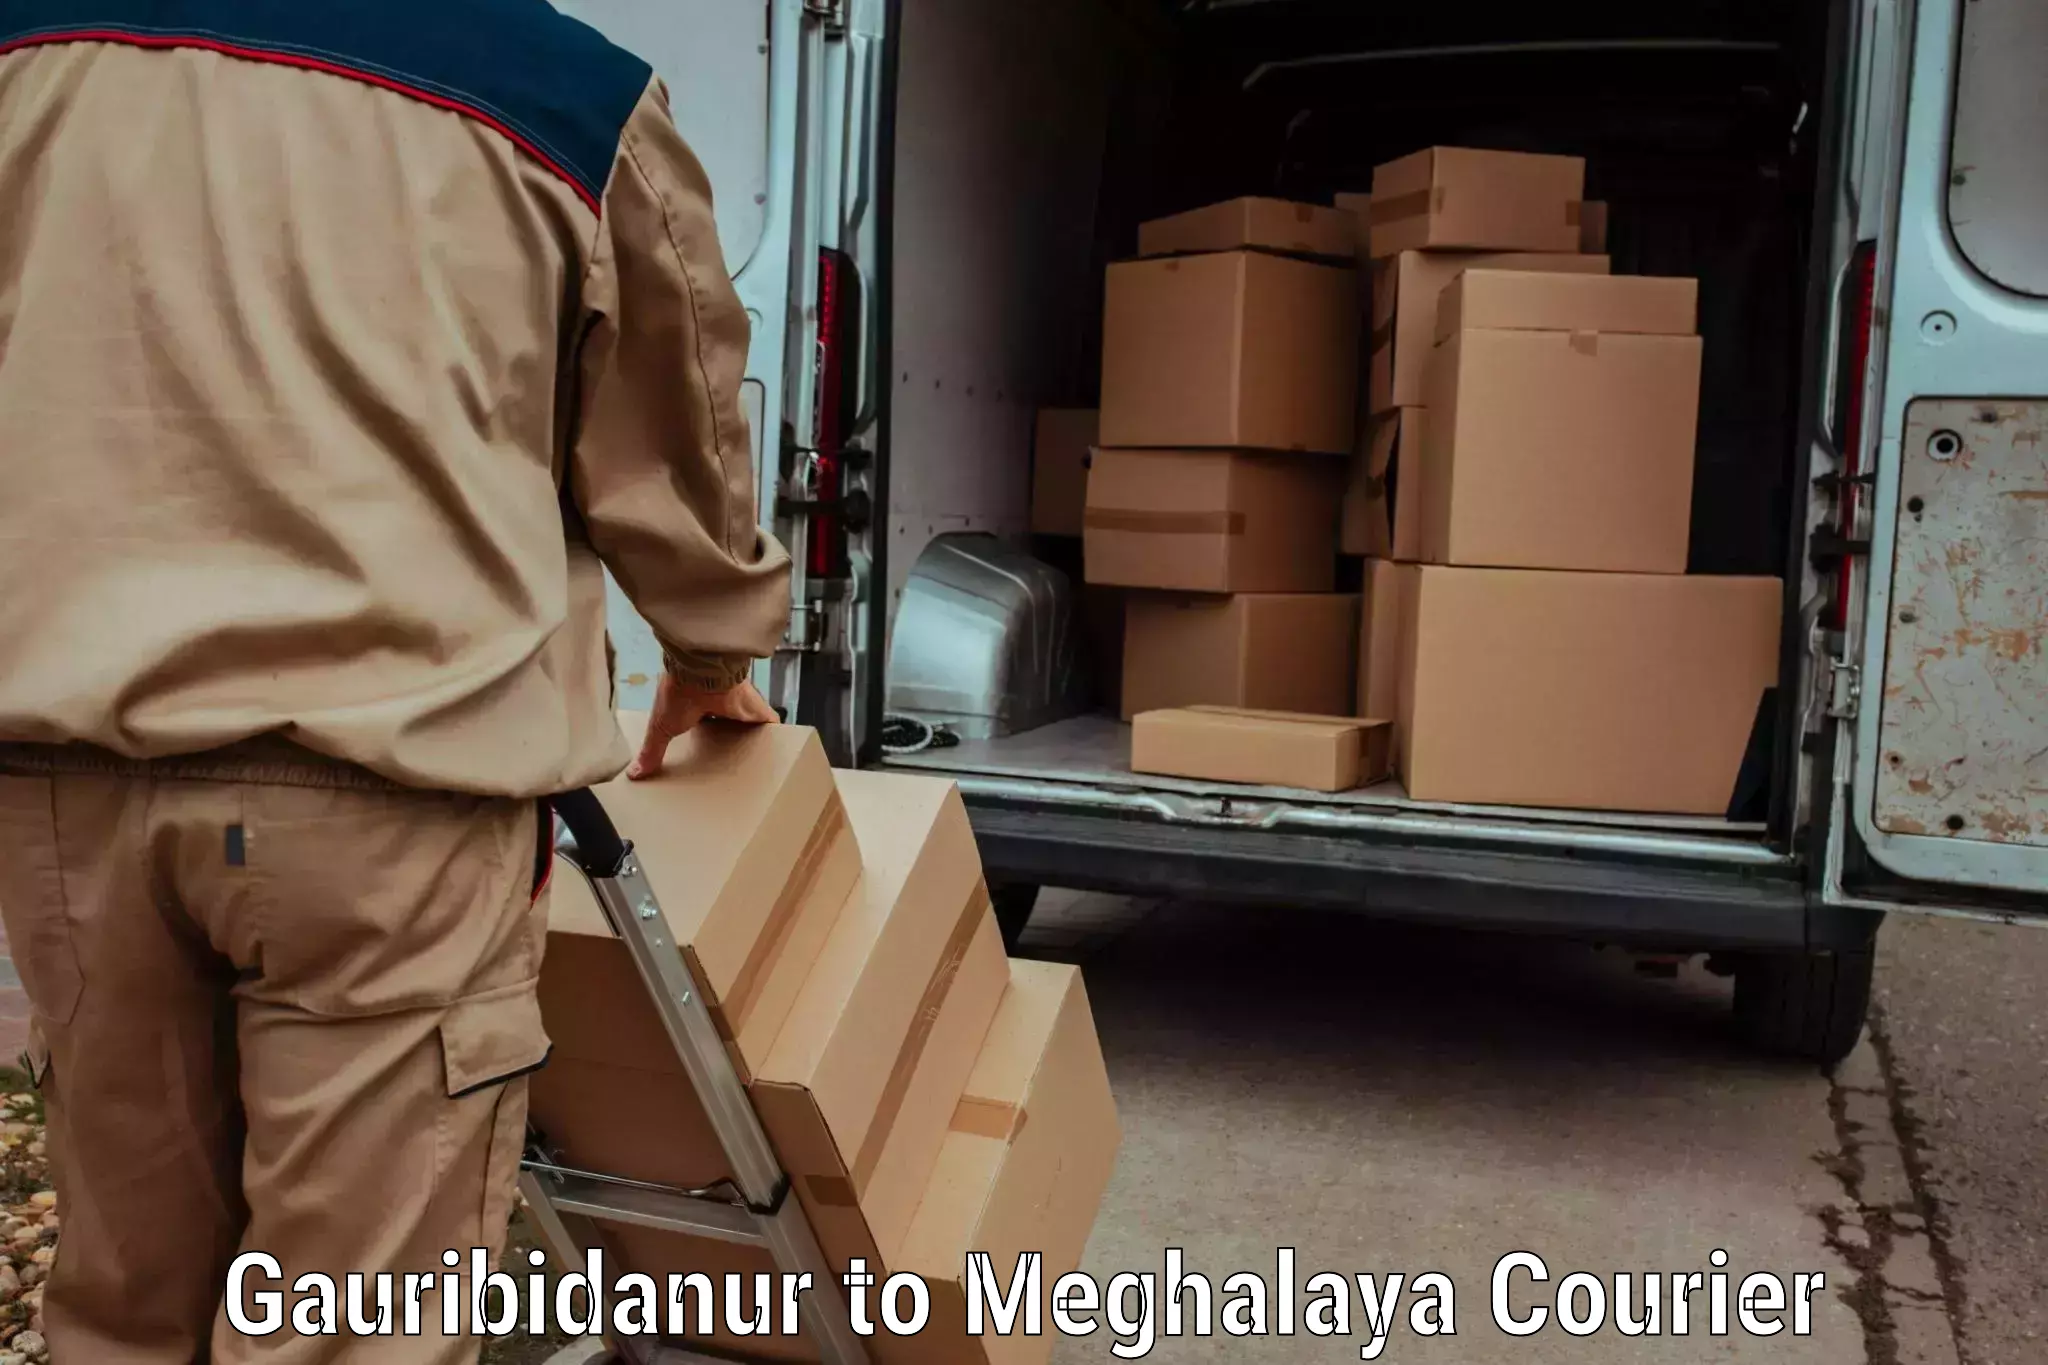 Courier service comparison in Gauribidanur to Shillong